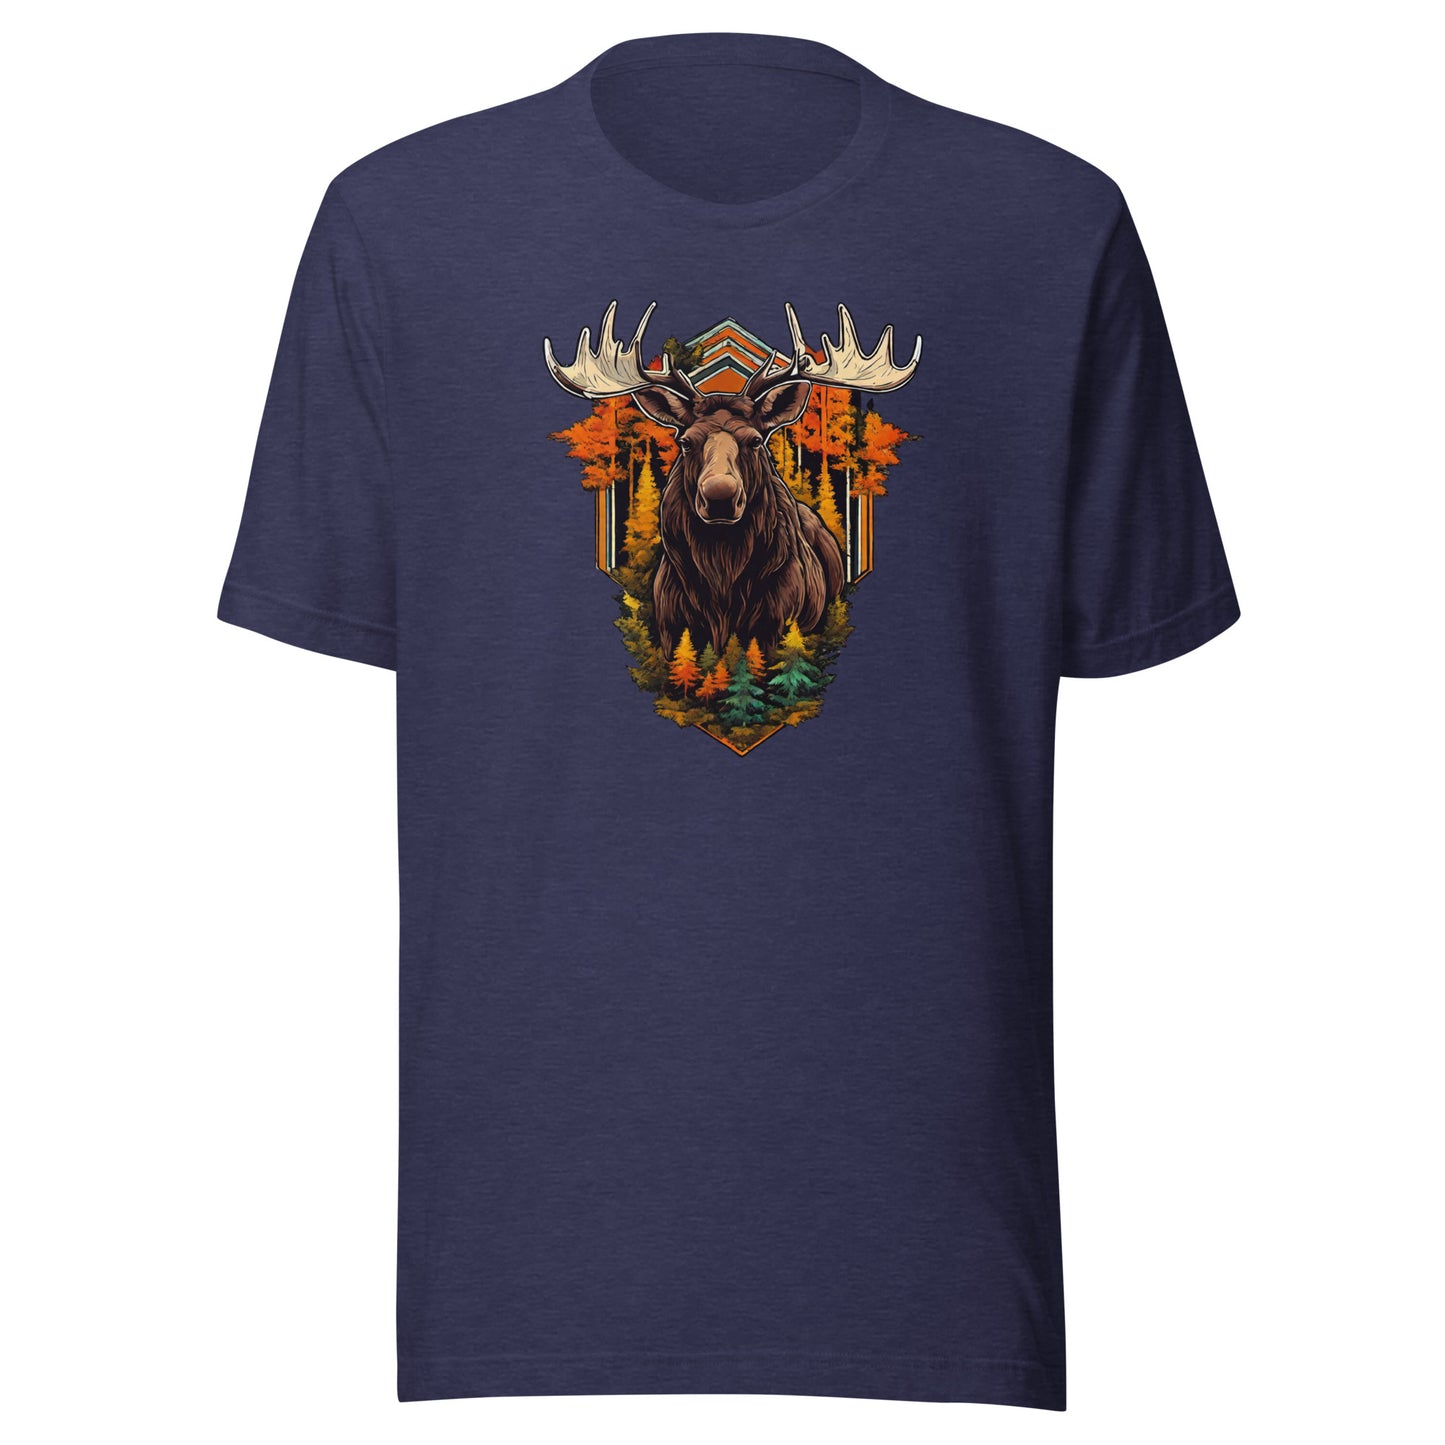 Moose & Forest Emblem Men's T-Shirt Heather Midnight Navy